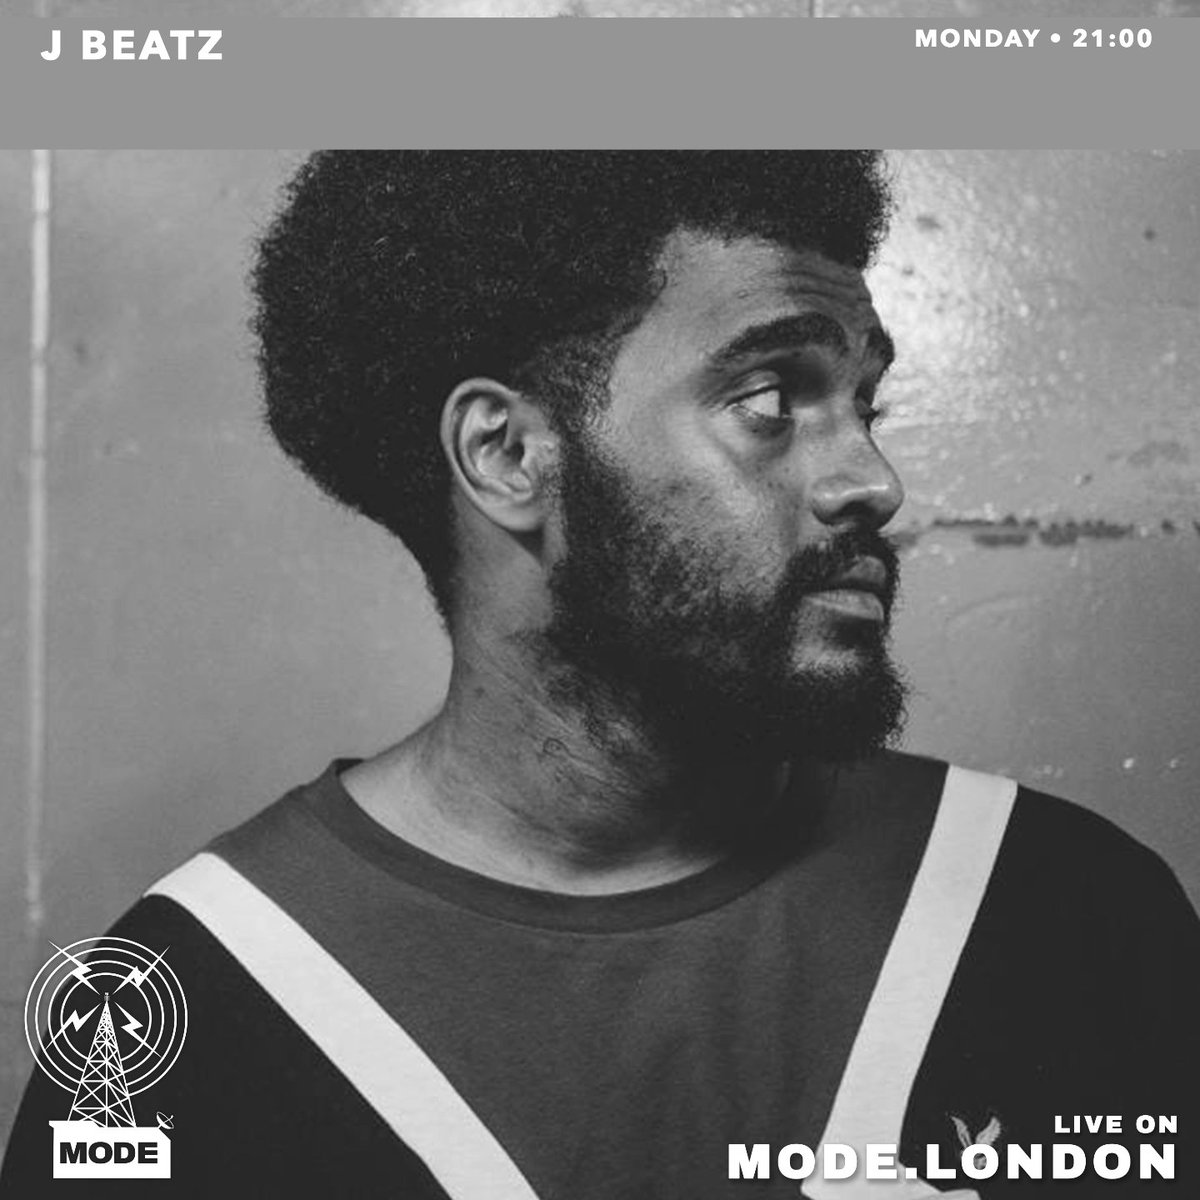 Catch me on @Moderadiolondon tonight 9-12

Also got new music from myself, @Skepta Farce @mreklipse @elclarto @TeezaBeats Jack Dat  @MangaStHilare Daneken @cocodubz23 @Lewi__B @BadnessImangie

Listen live at Mode.London